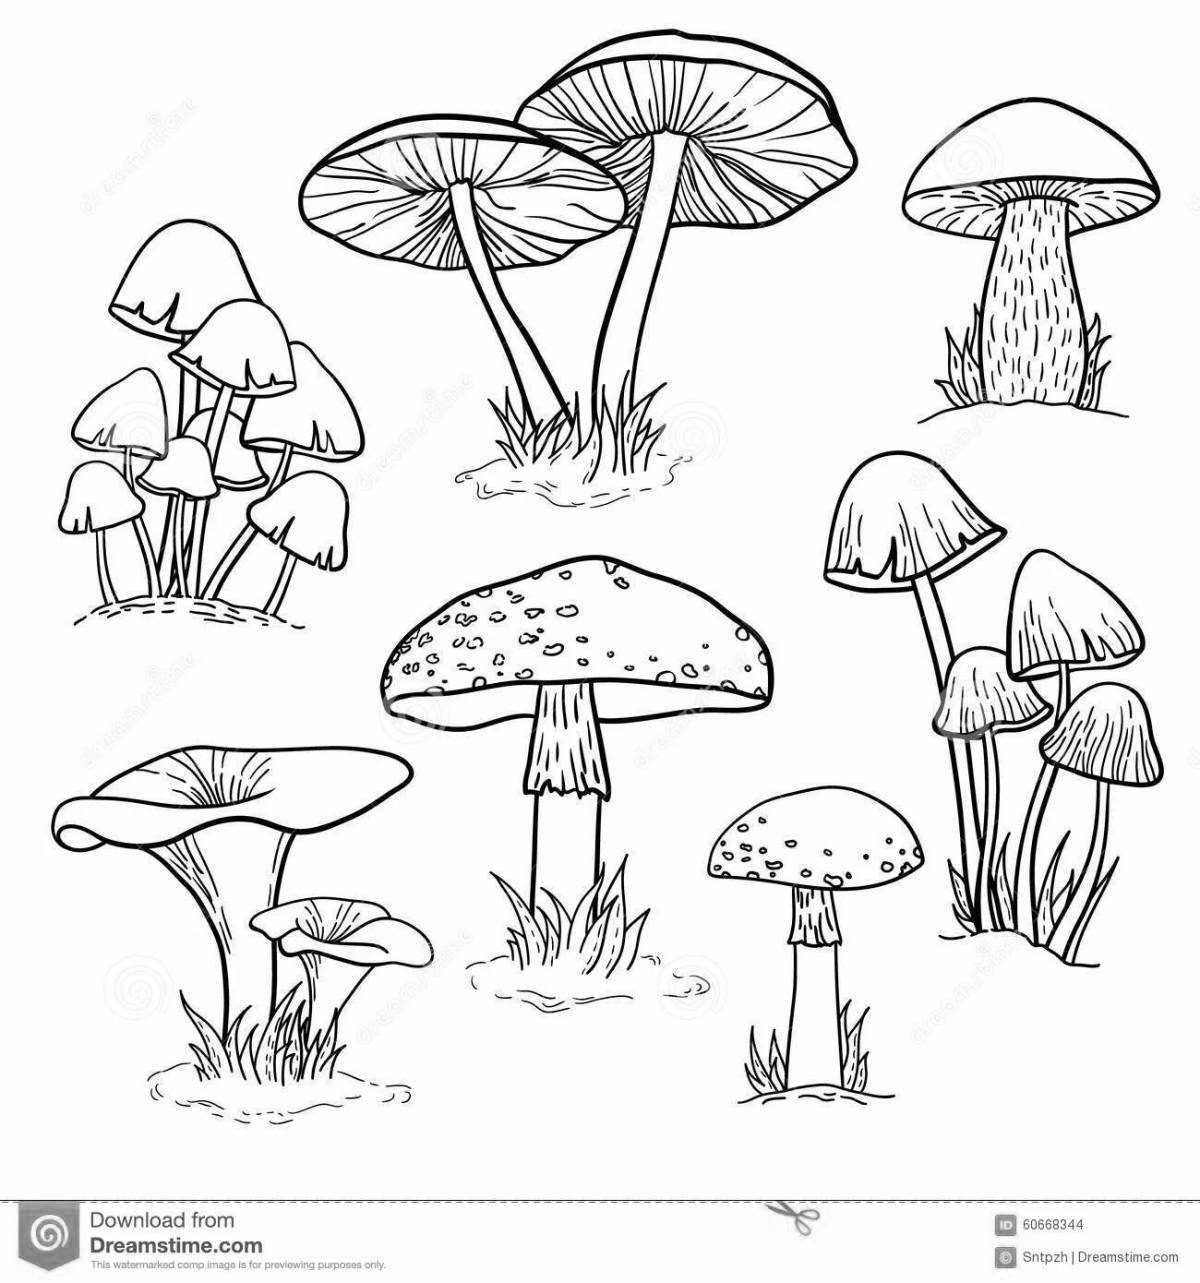 Coloring book magnificent poisonous mushrooms